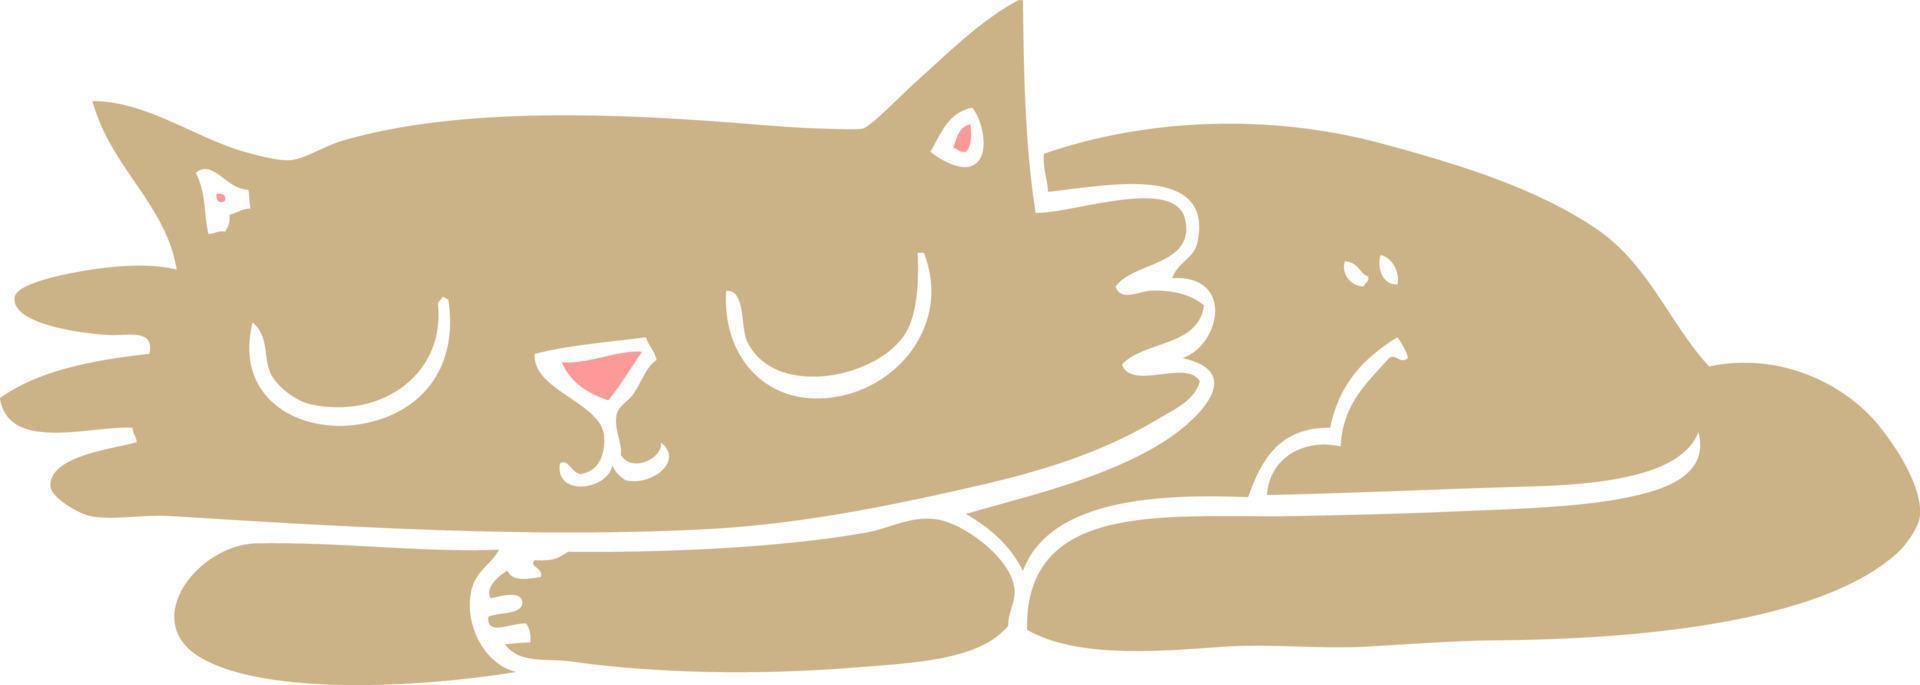 Cartoon-Doodle schlafende Katze vektor